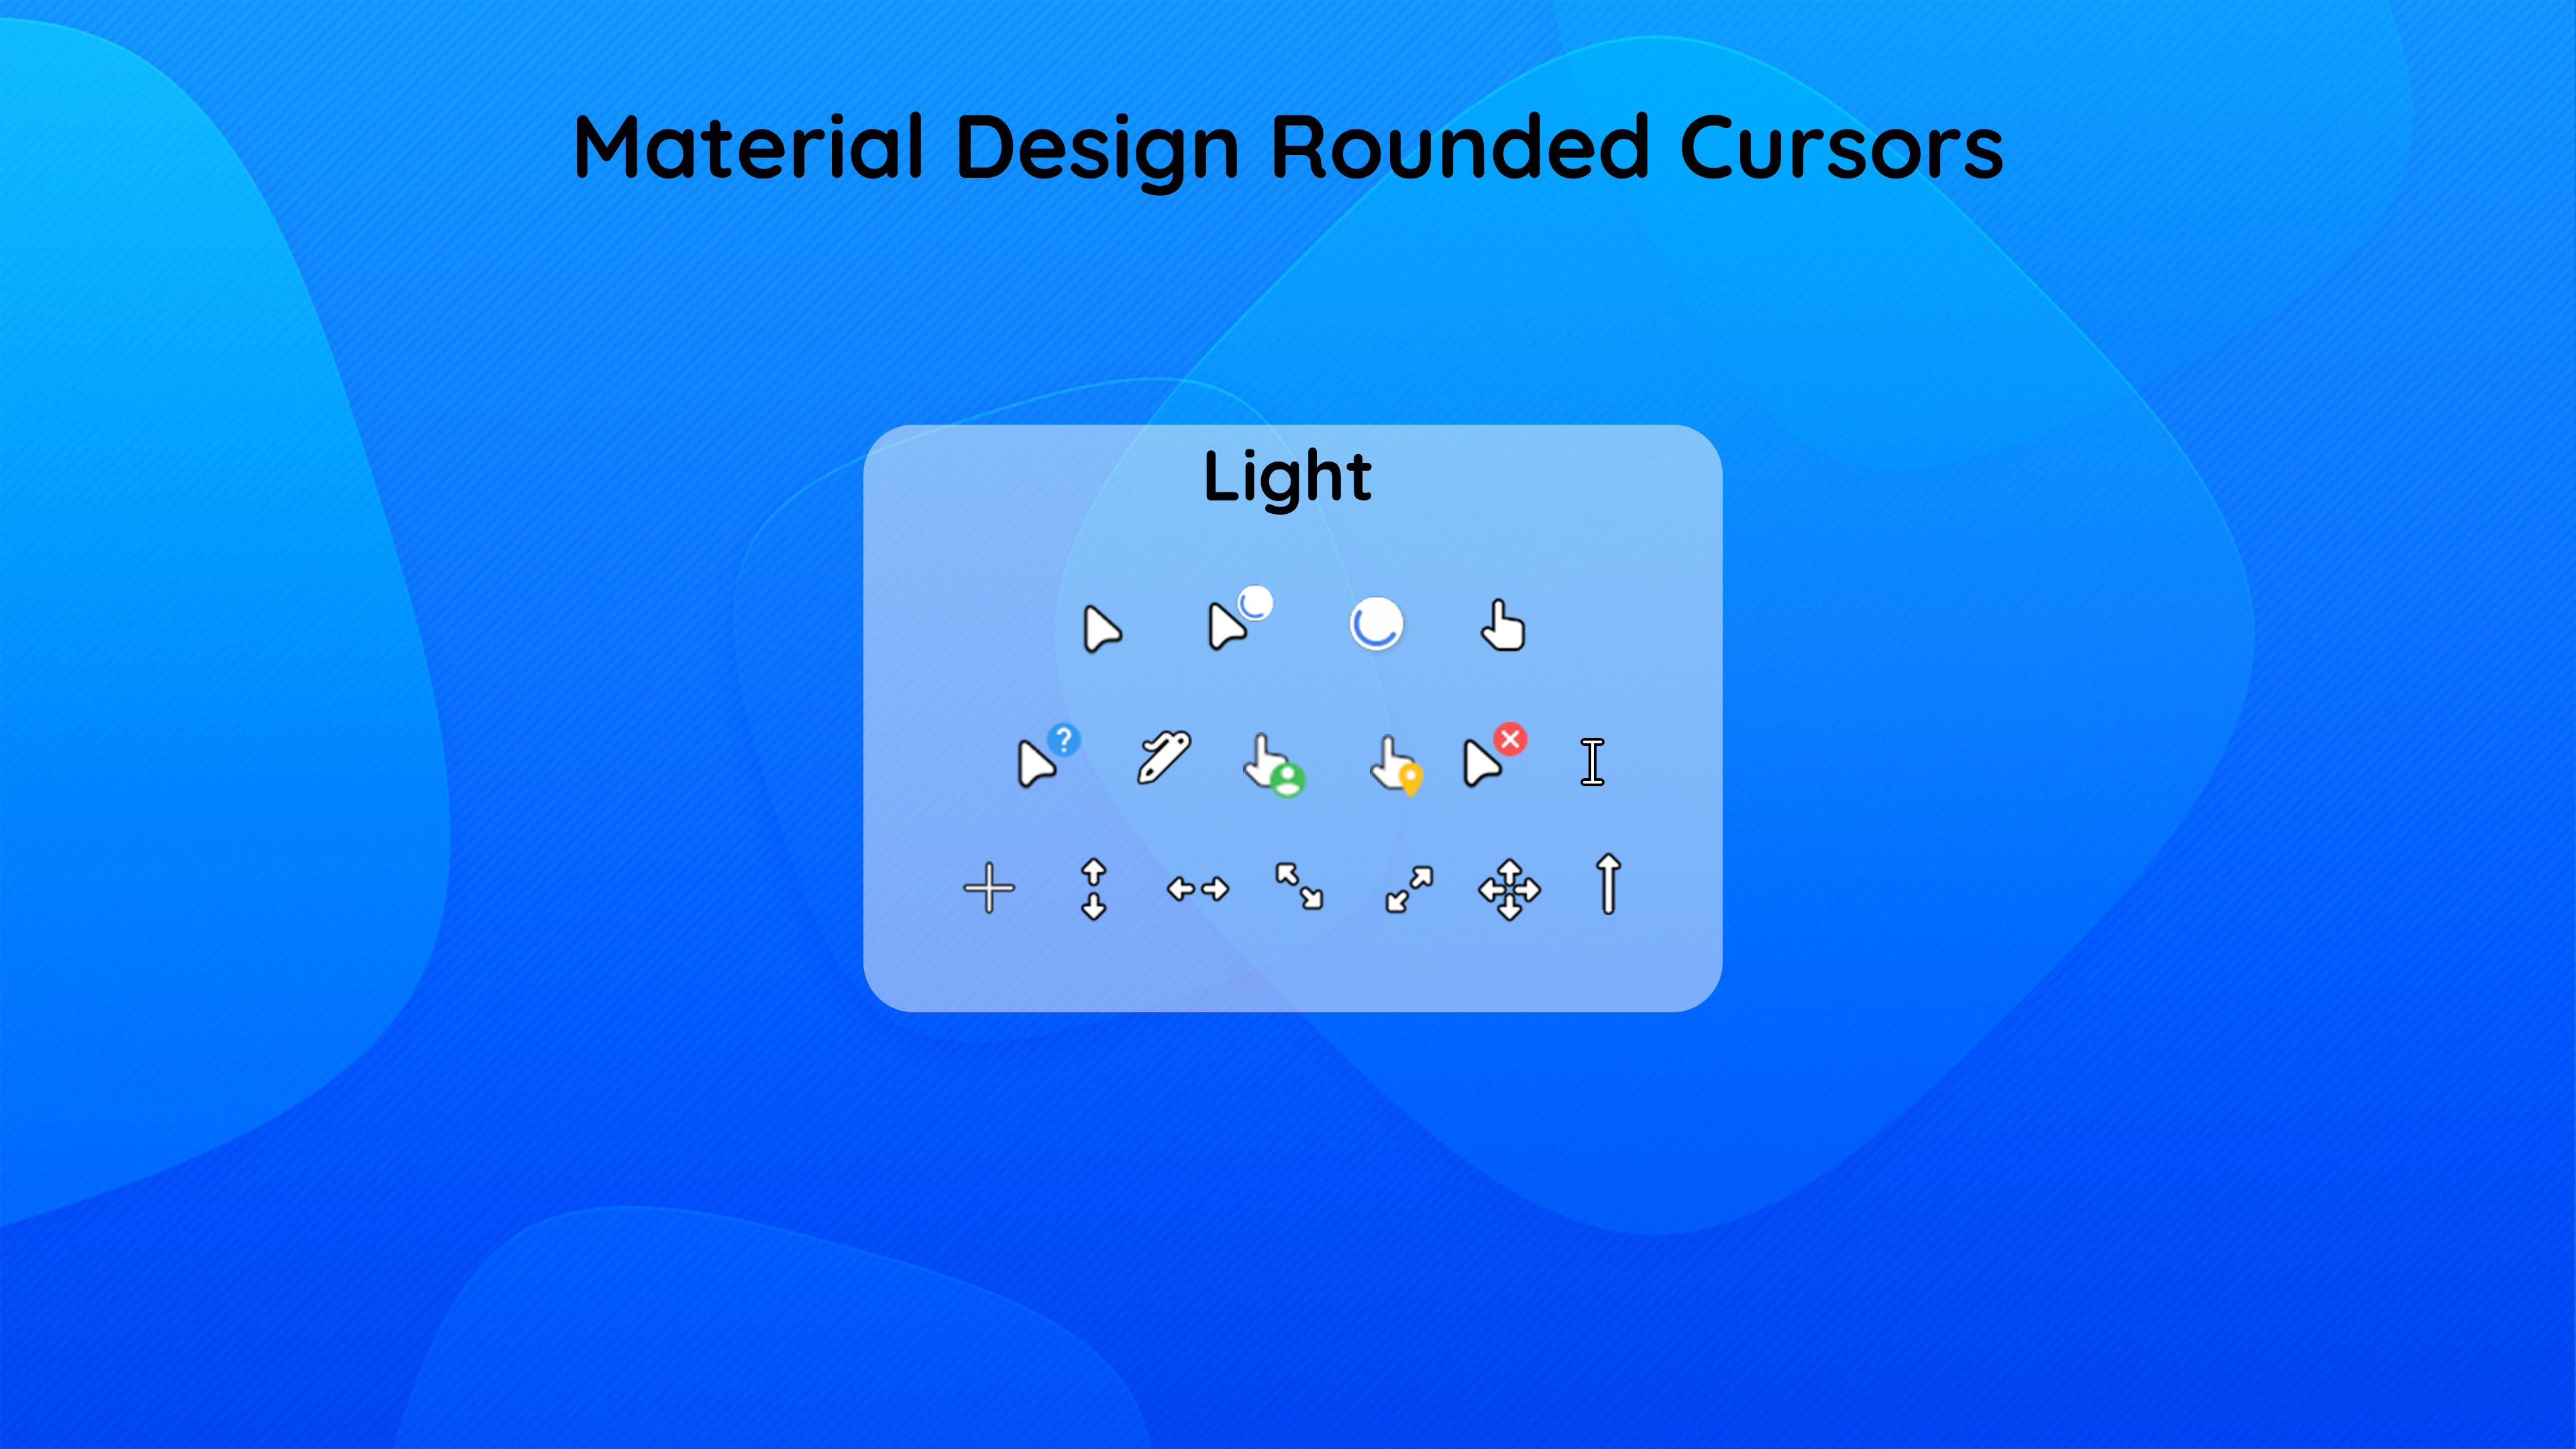 Windows Material Design Cursor V2 Dark Hdpi by jepriCreations on